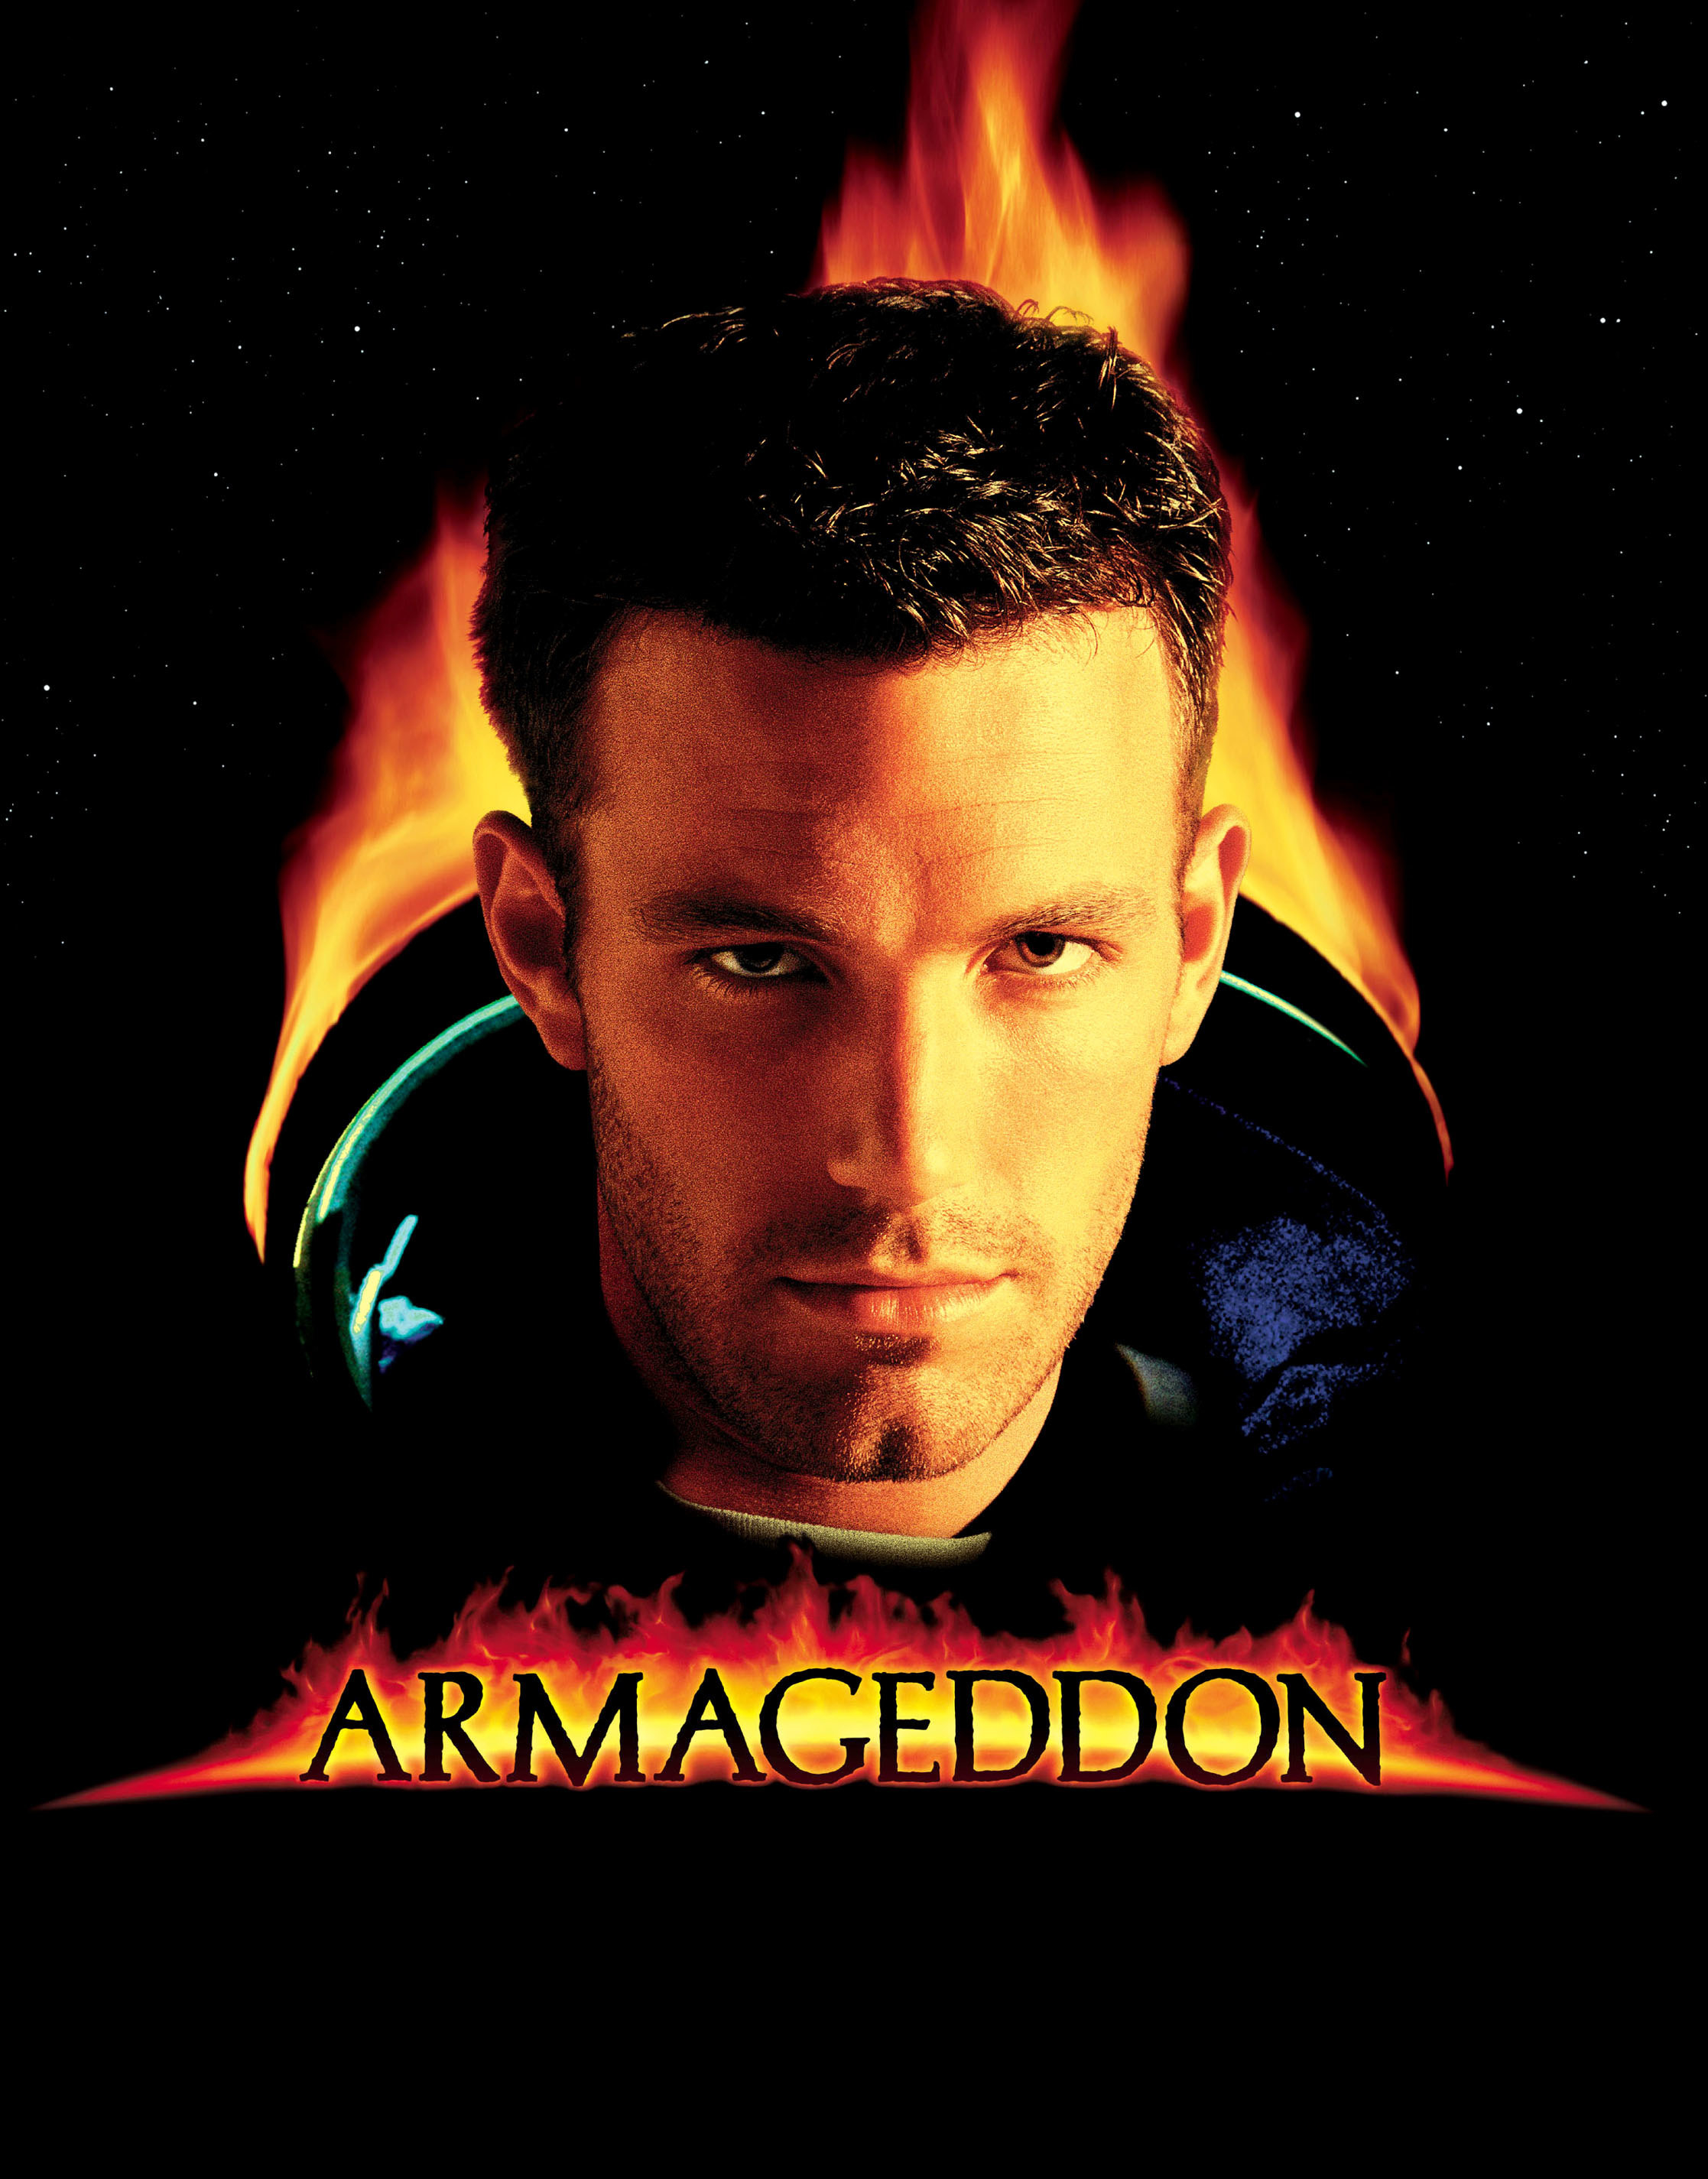 Affleck on the Armageddon poster